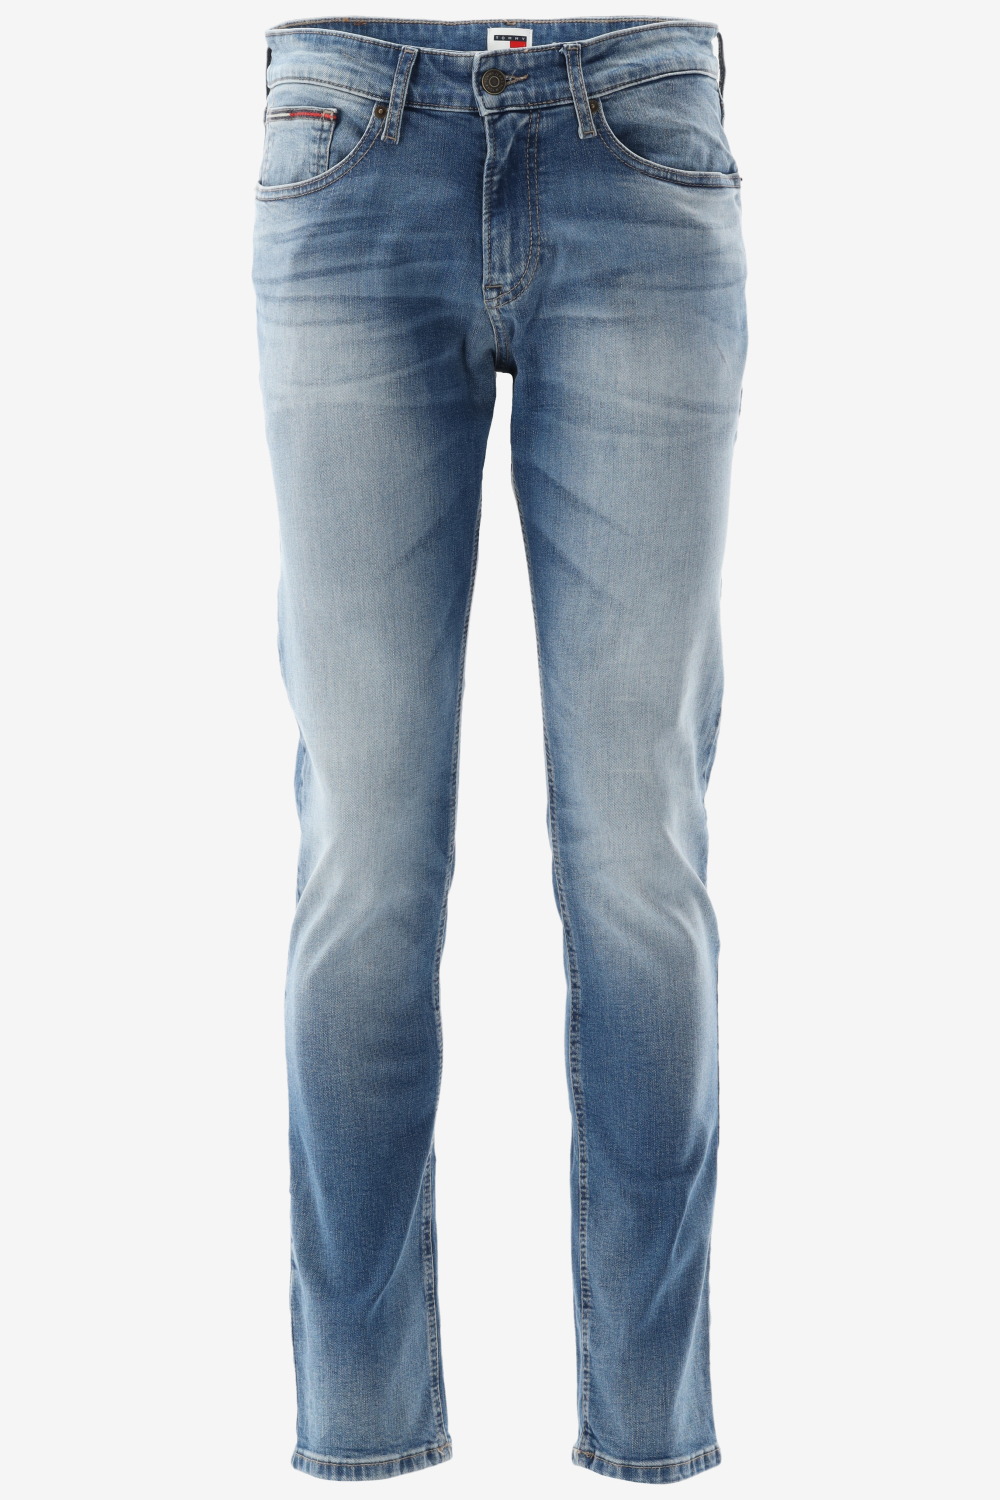 Tommy hilfiger slim fit scanton slim fit jeans maat 34-L36